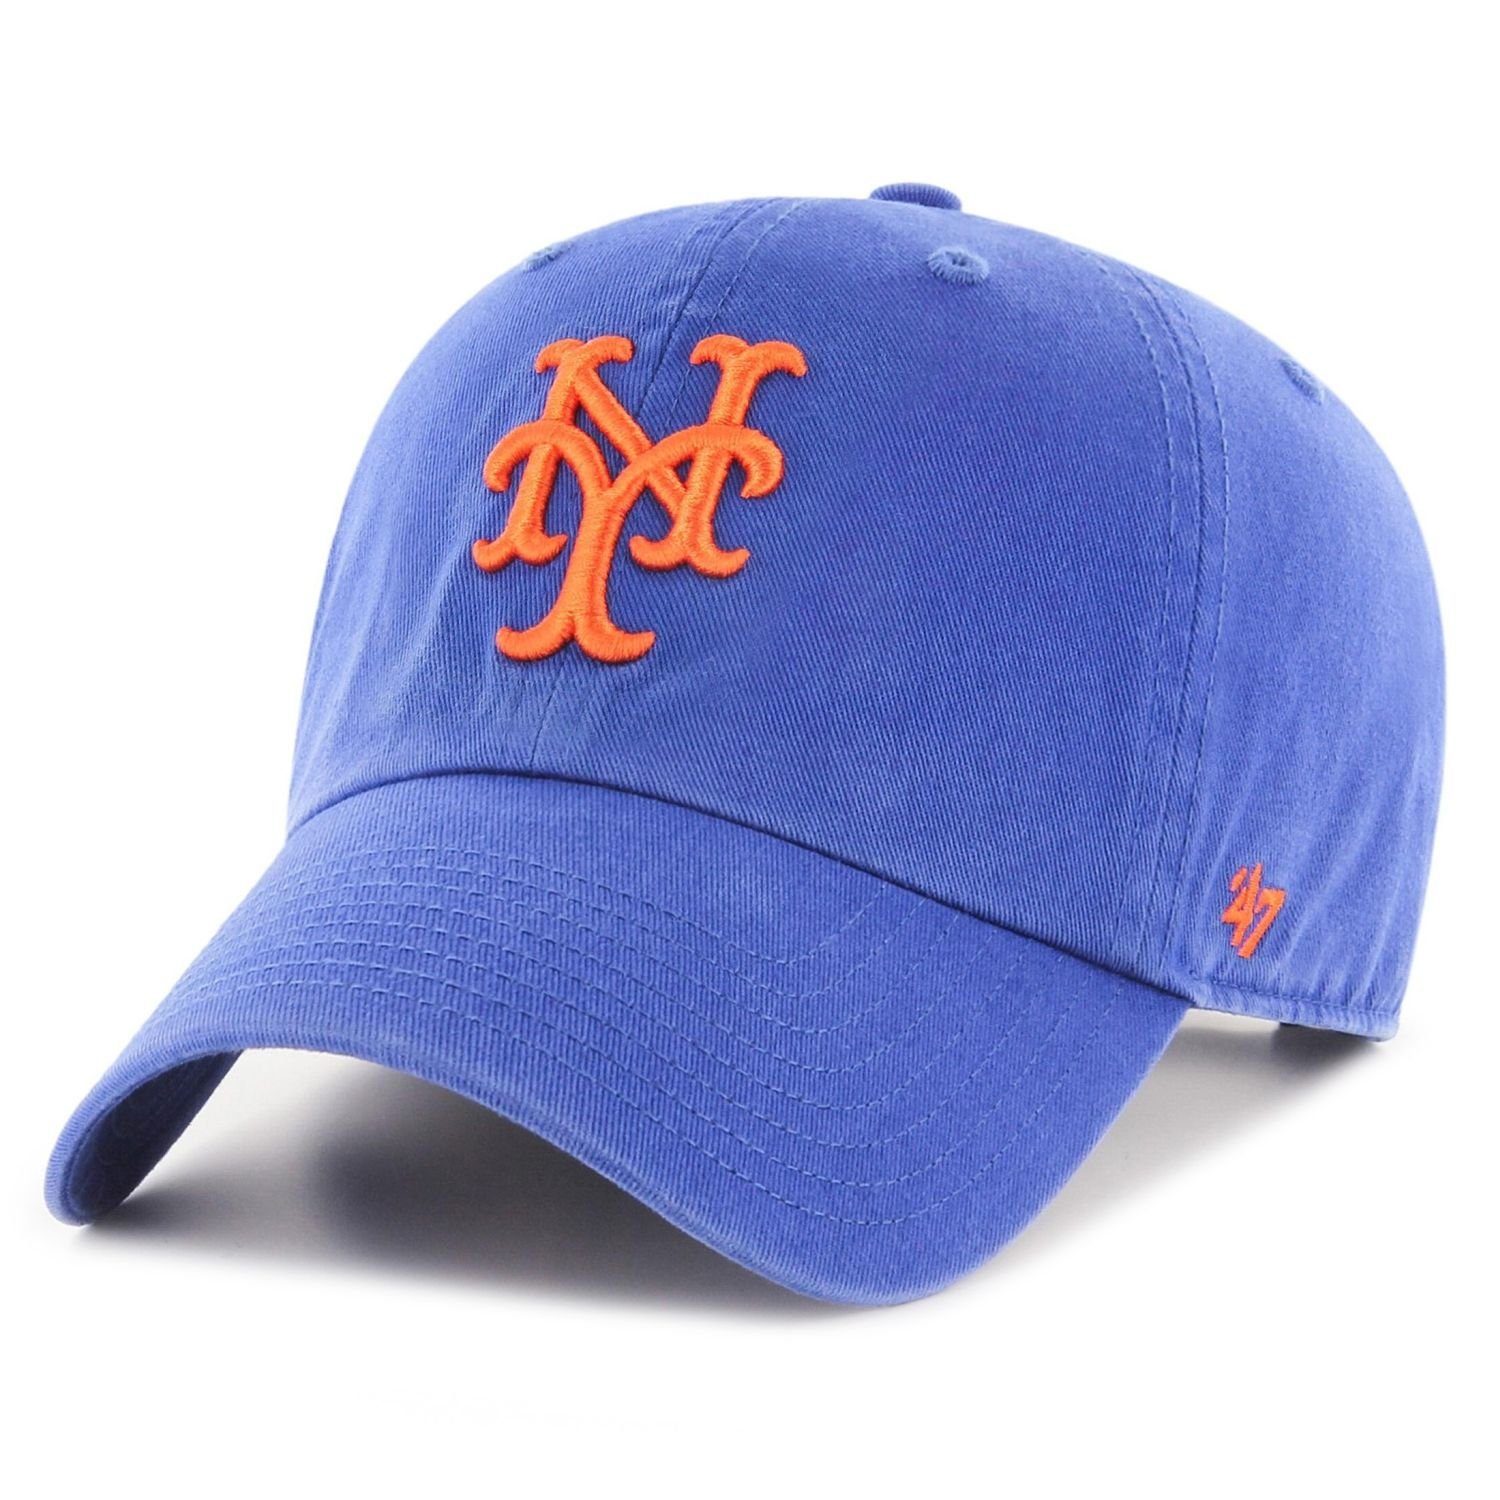 CLEAN Cap Mets Strapback York New Baseball Brand '47 UP